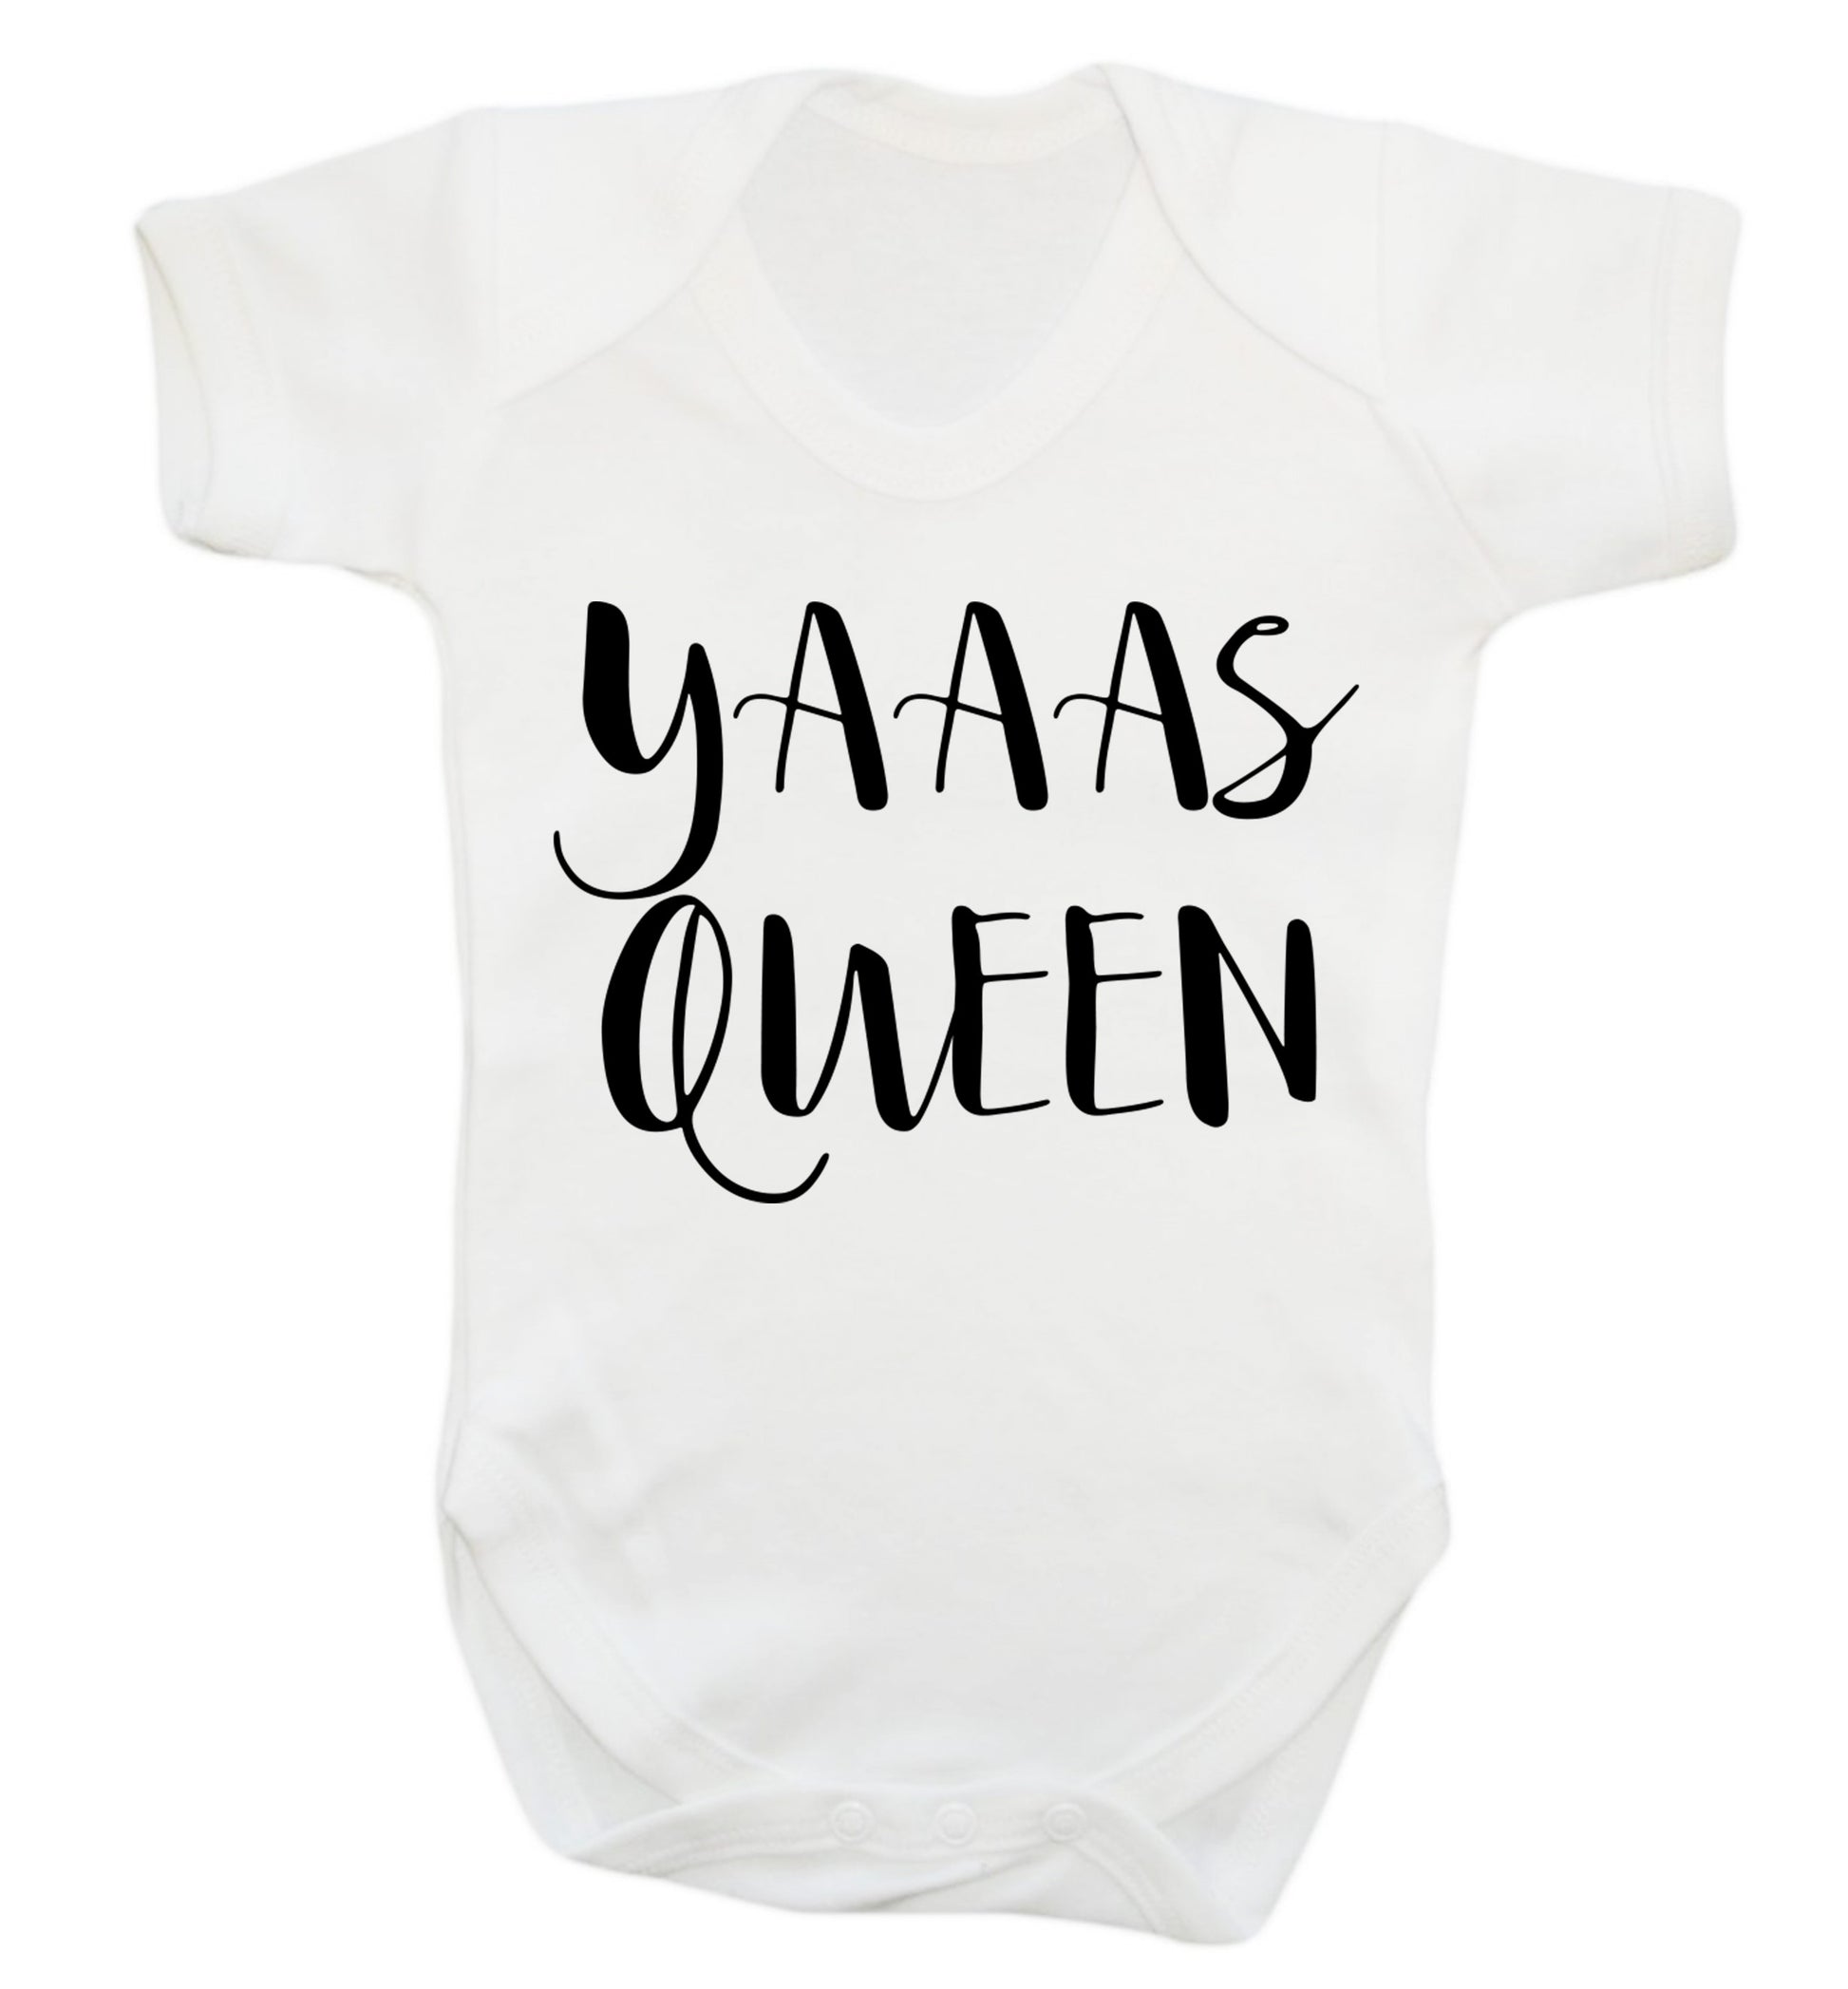 Yas Queen Baby Vest white 18-24 months